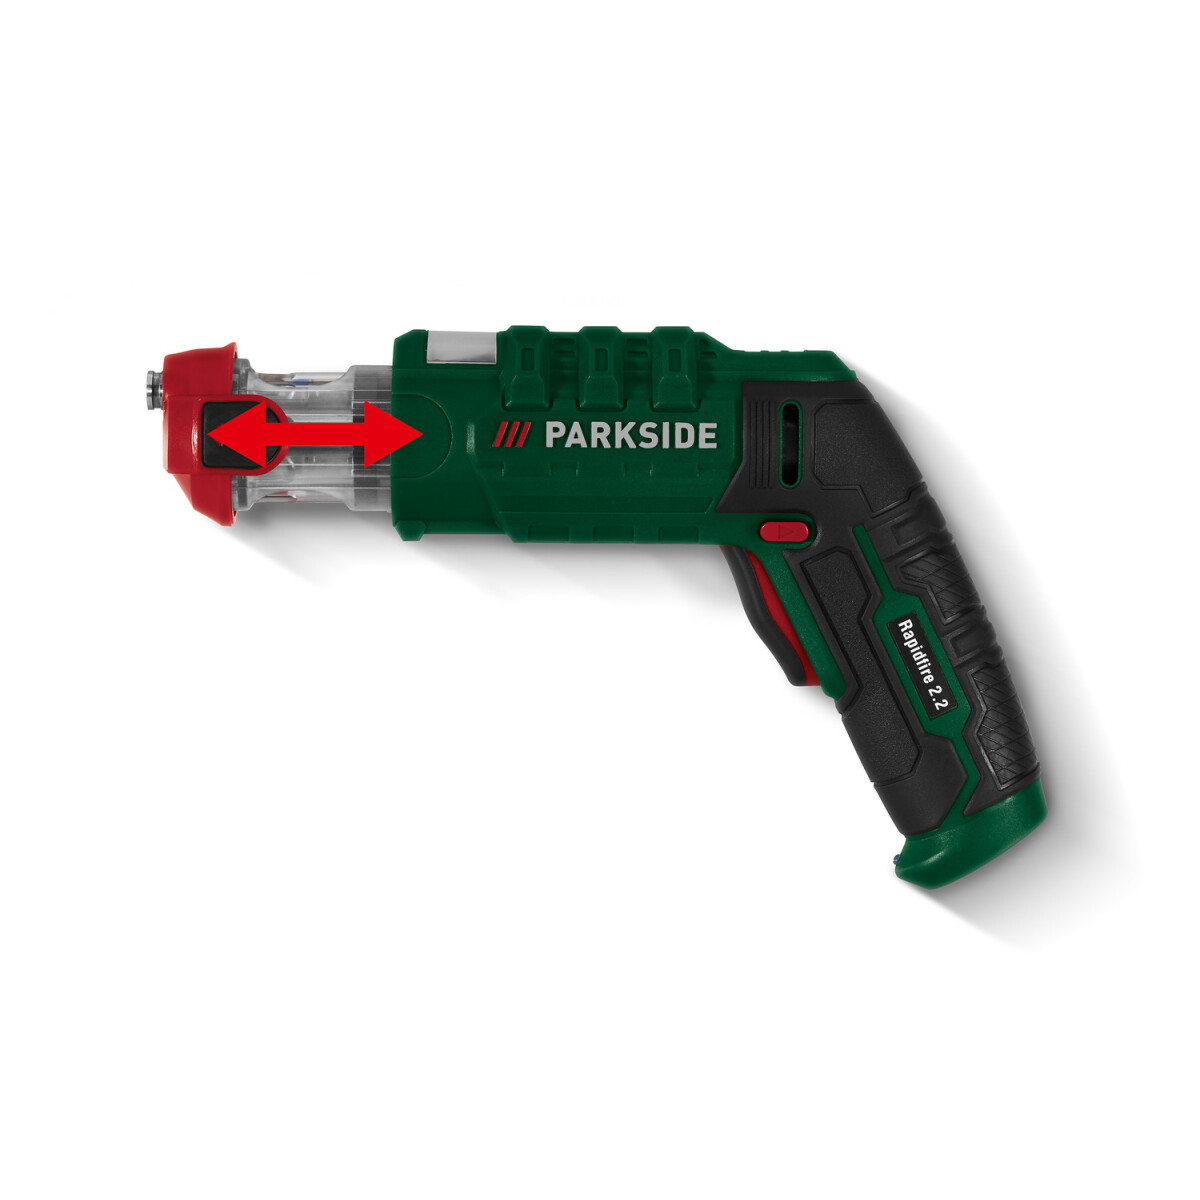 PARKSIDE® 4 V Akku-Wechselbitschrauber »Rapidfire 2.2«, inkl. Bitset -  B-Ware sehr gut, 16,99 €